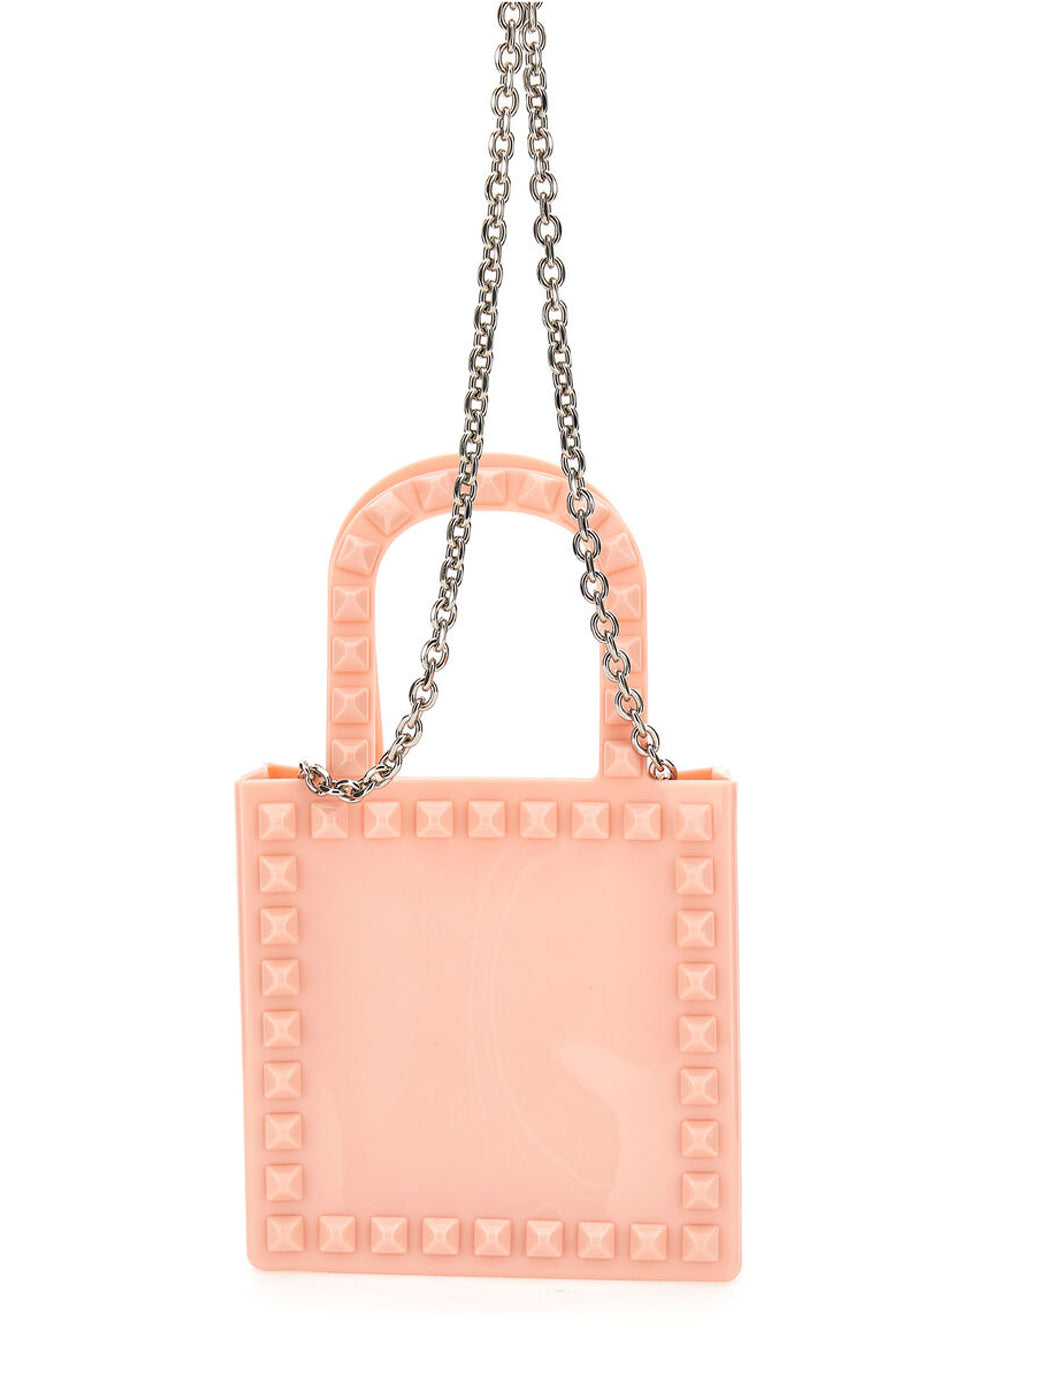 MONNALISA pink pvc handbag for girl-17A009